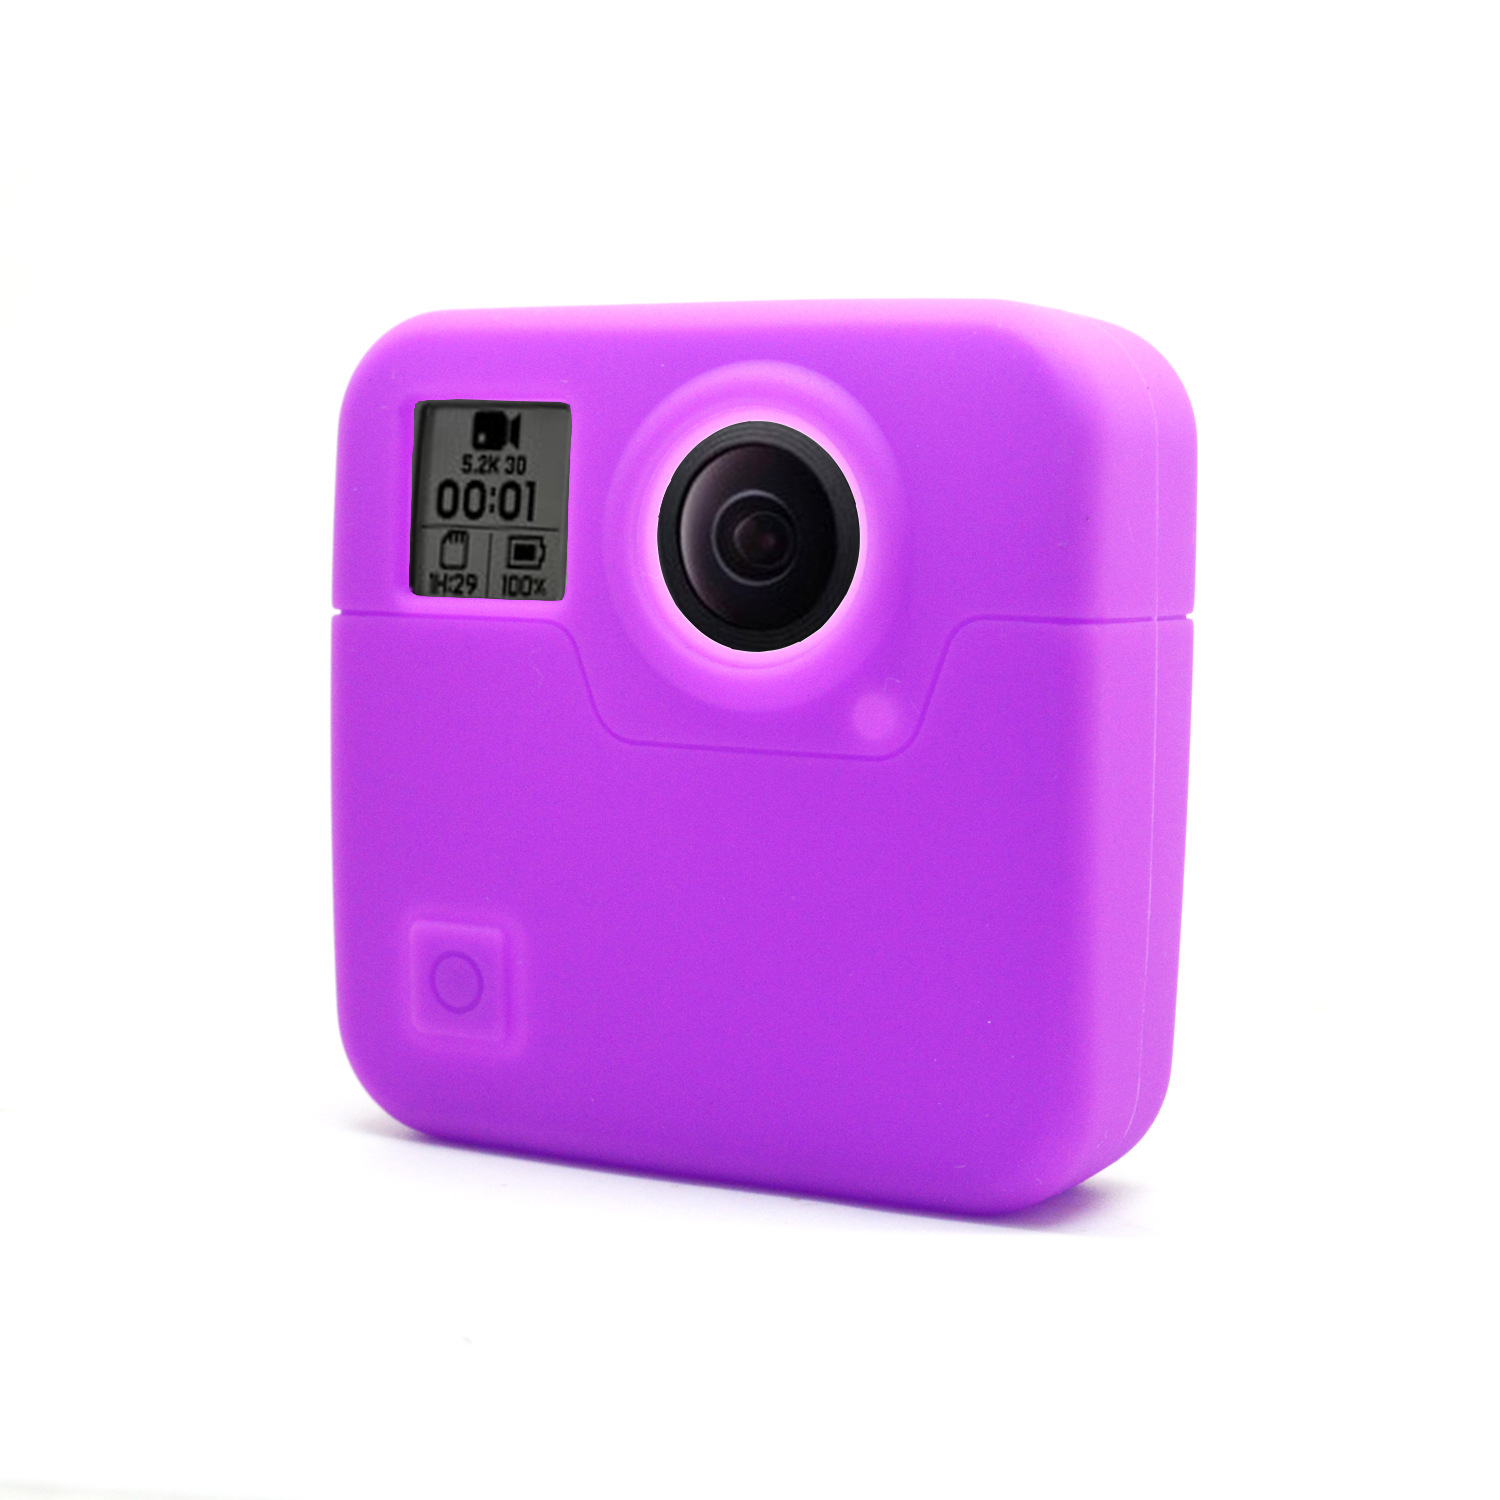 Silicone-Protective-Case-Skin-Cover-Camera-Accessories-for-GoPro-Fusion-360-Camera-8-Colors-1238129-4